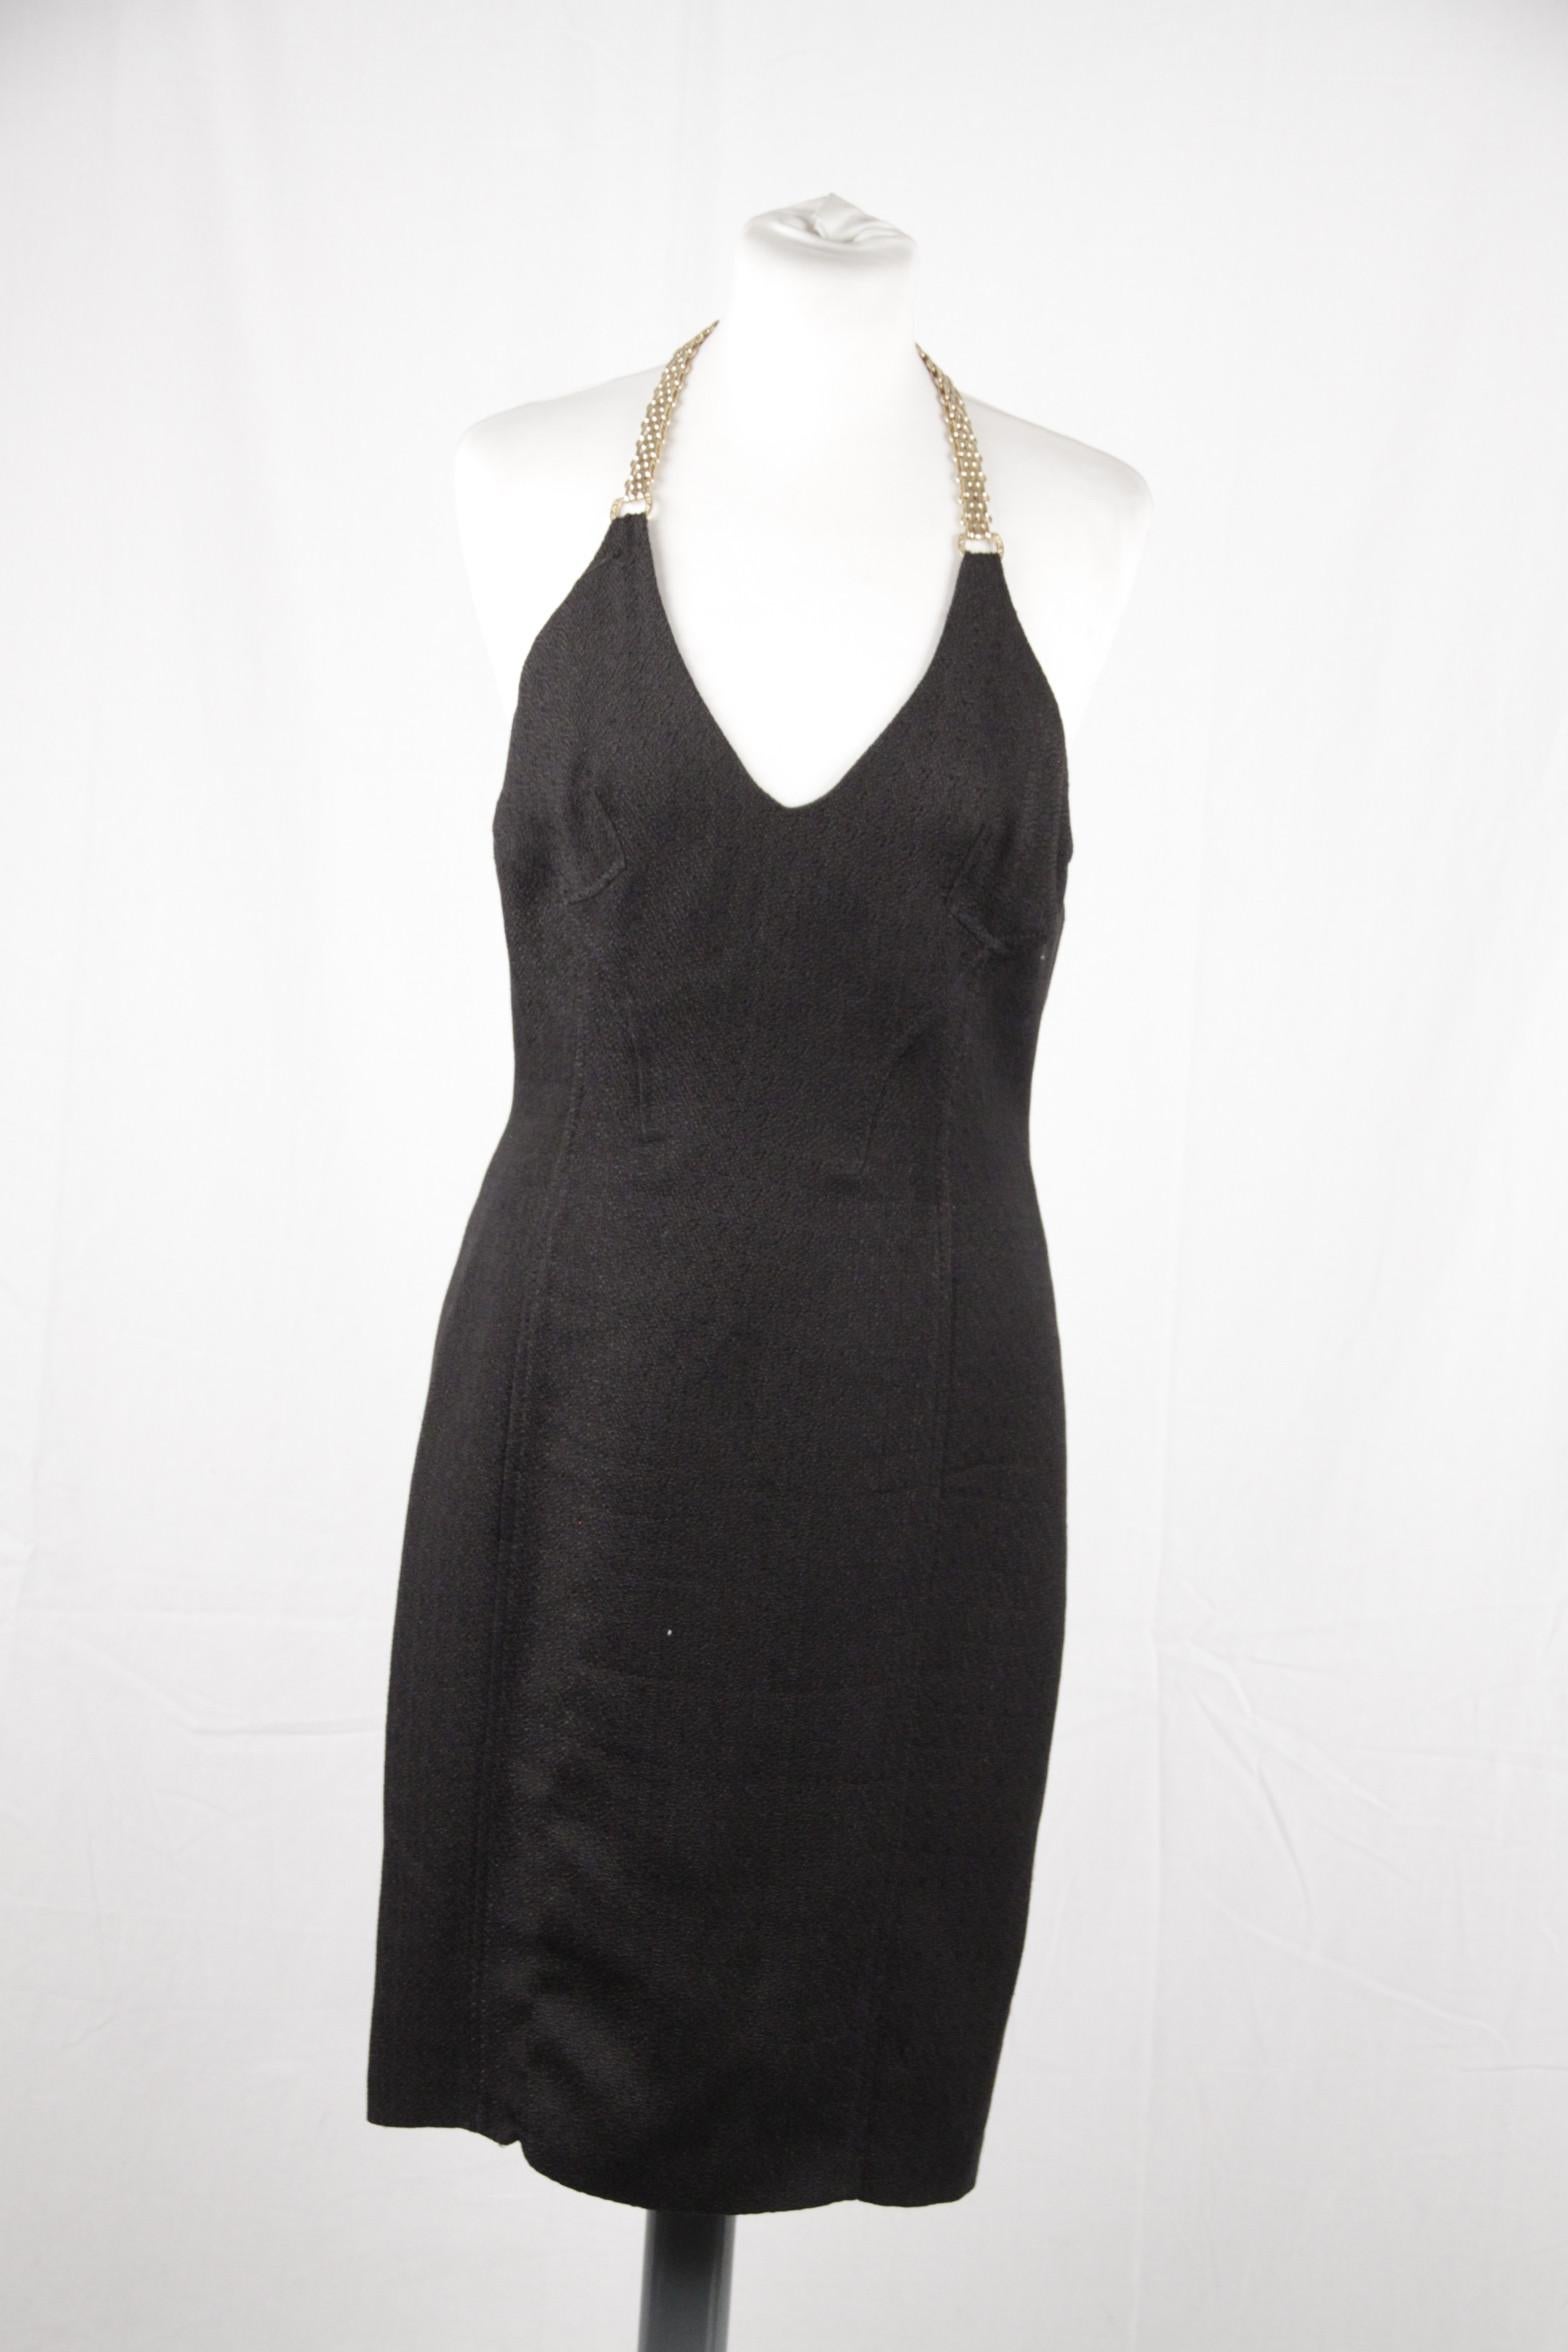 Versace Black Cotton Blend Halterneck dress with chain Strap Size 42 5